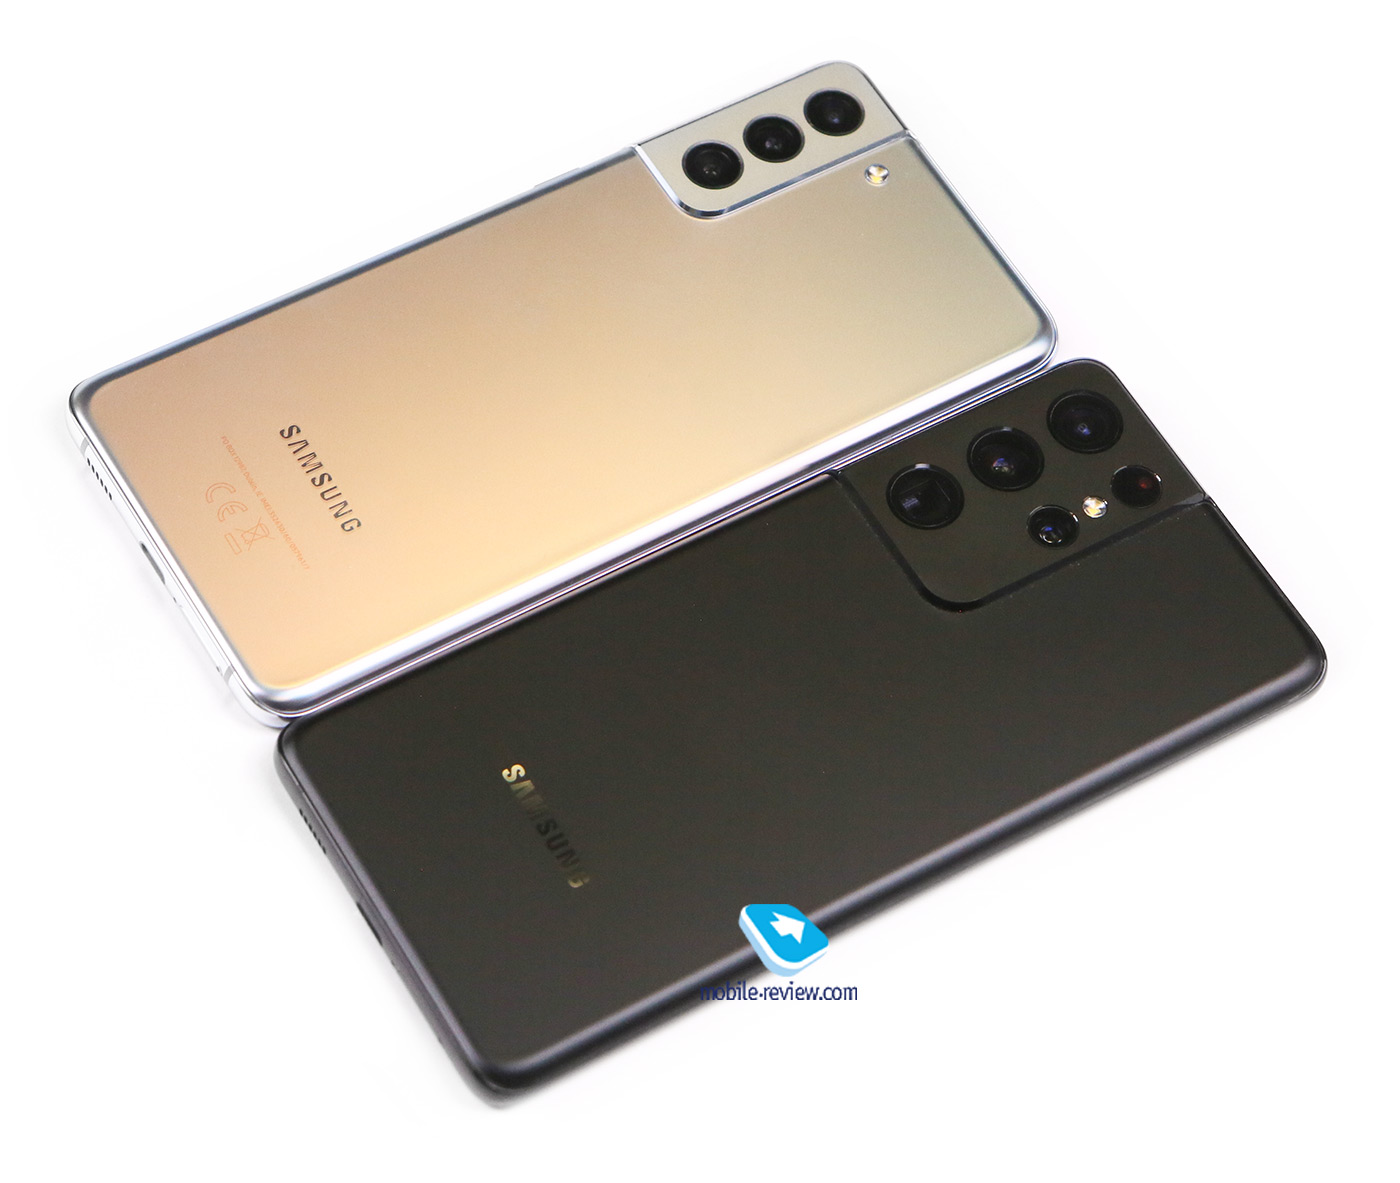   Samsung Galaxy S21 Ultra (SM-G988)